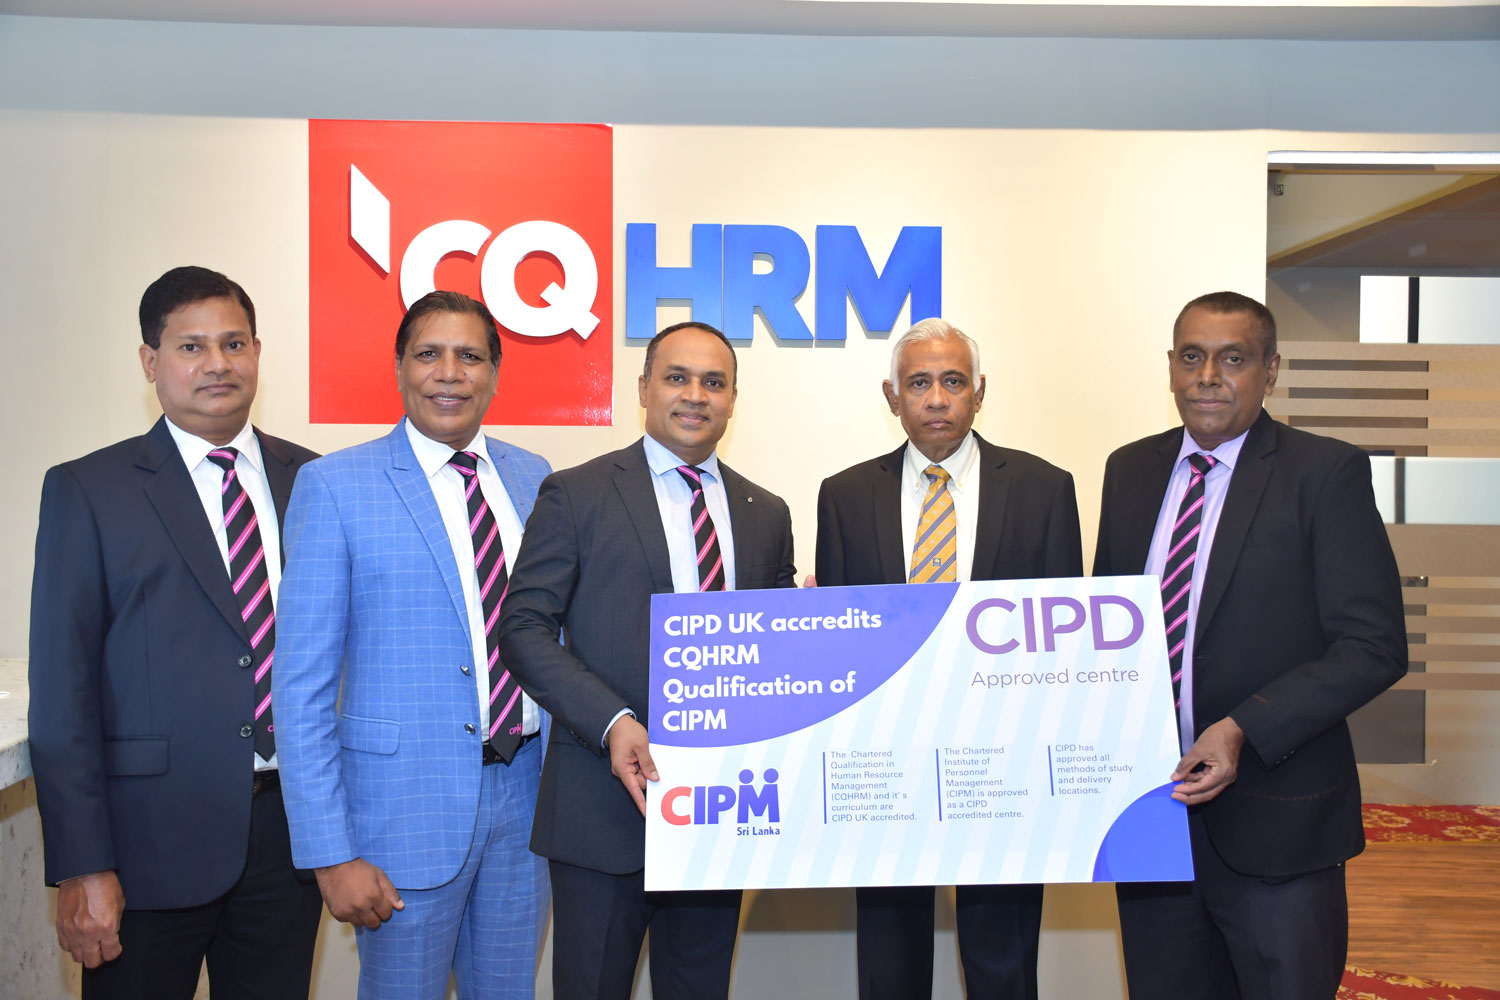 CIPM Sri Lanka’s CQHRM Receives Prestigious CIPD UK Accreditation